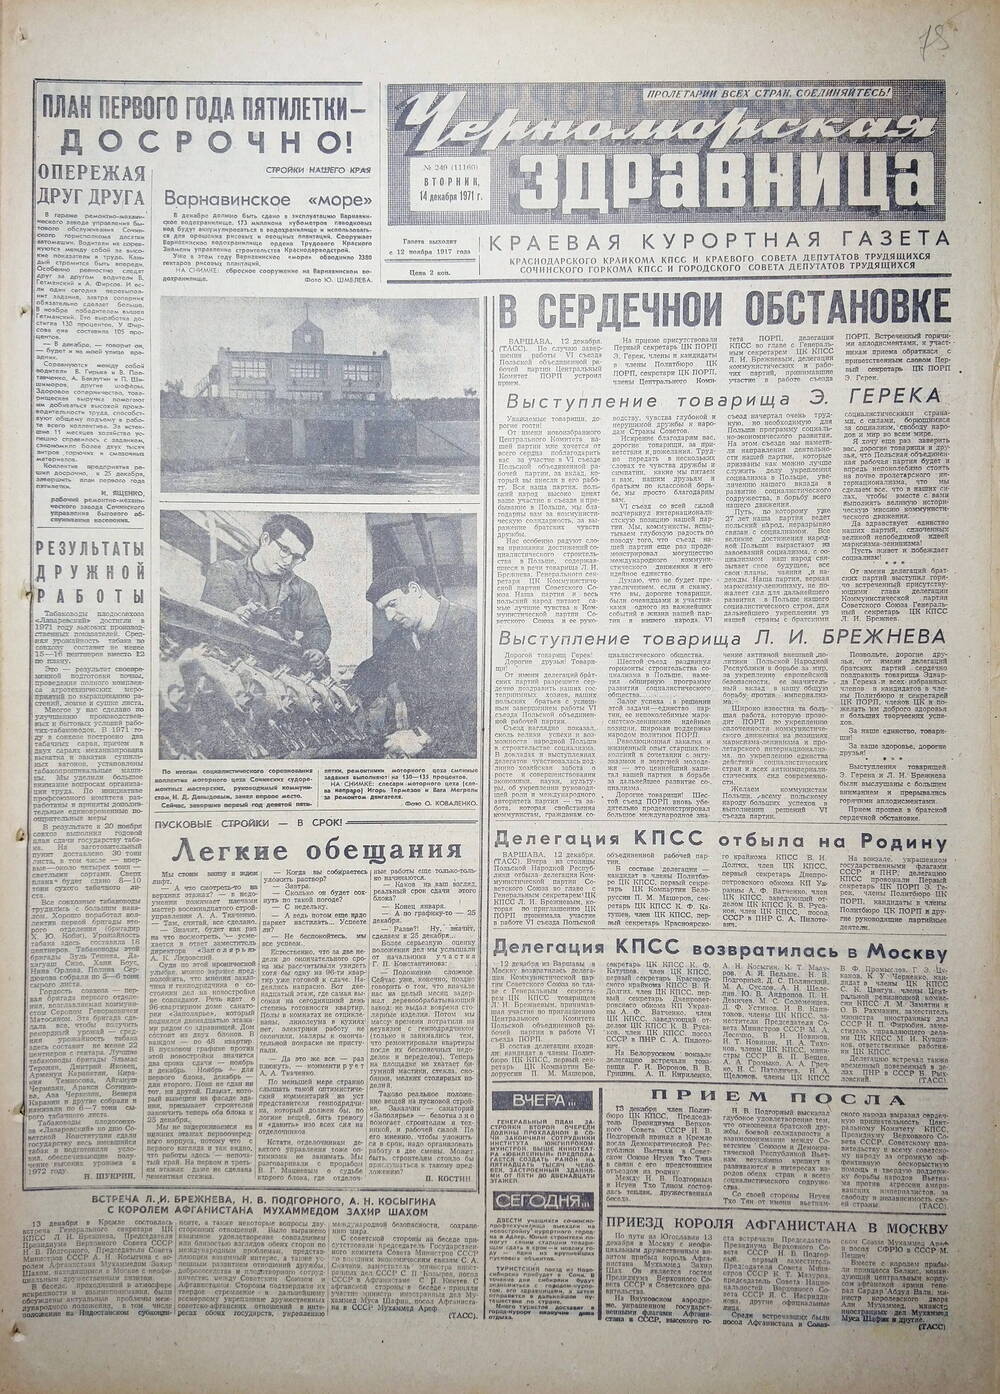 Газета краевая курортная «Черноморская здравница» № 249 (11160) от 14 декабря 1971 г.